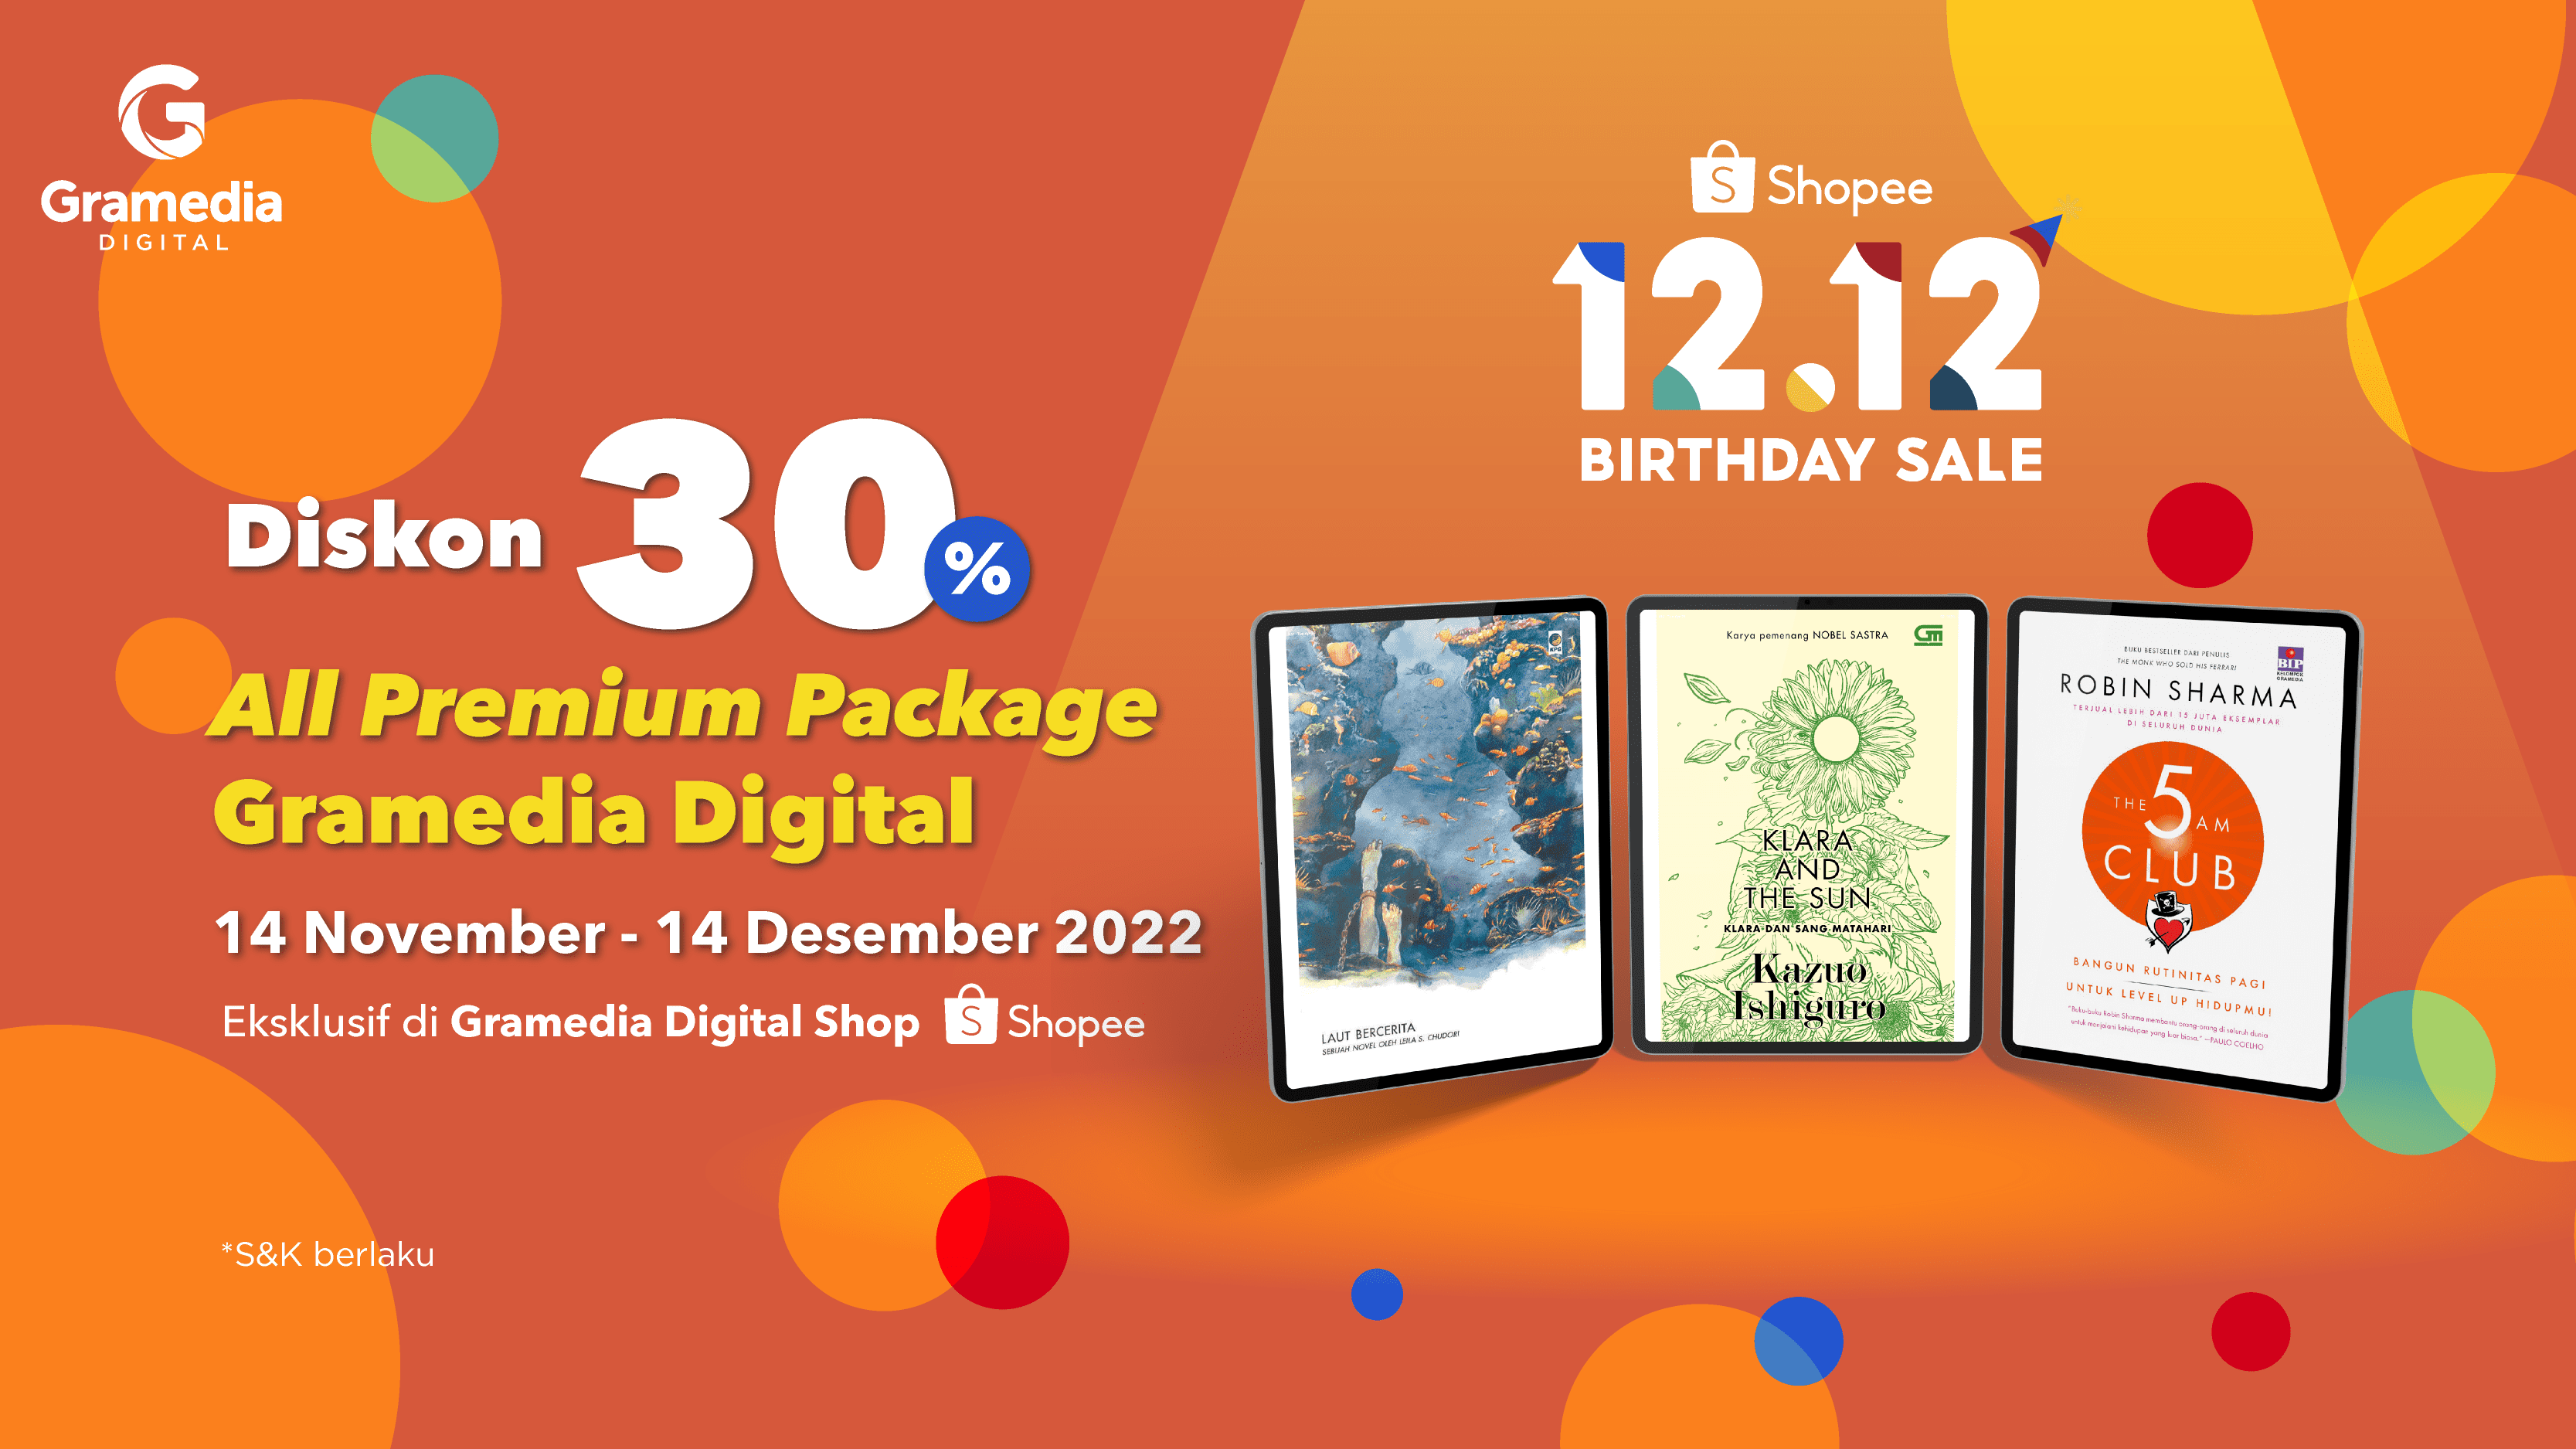 Gramedia Digital All Premium Package Diskon 30% Spesial 12.12 Shopee Birthday Sale!